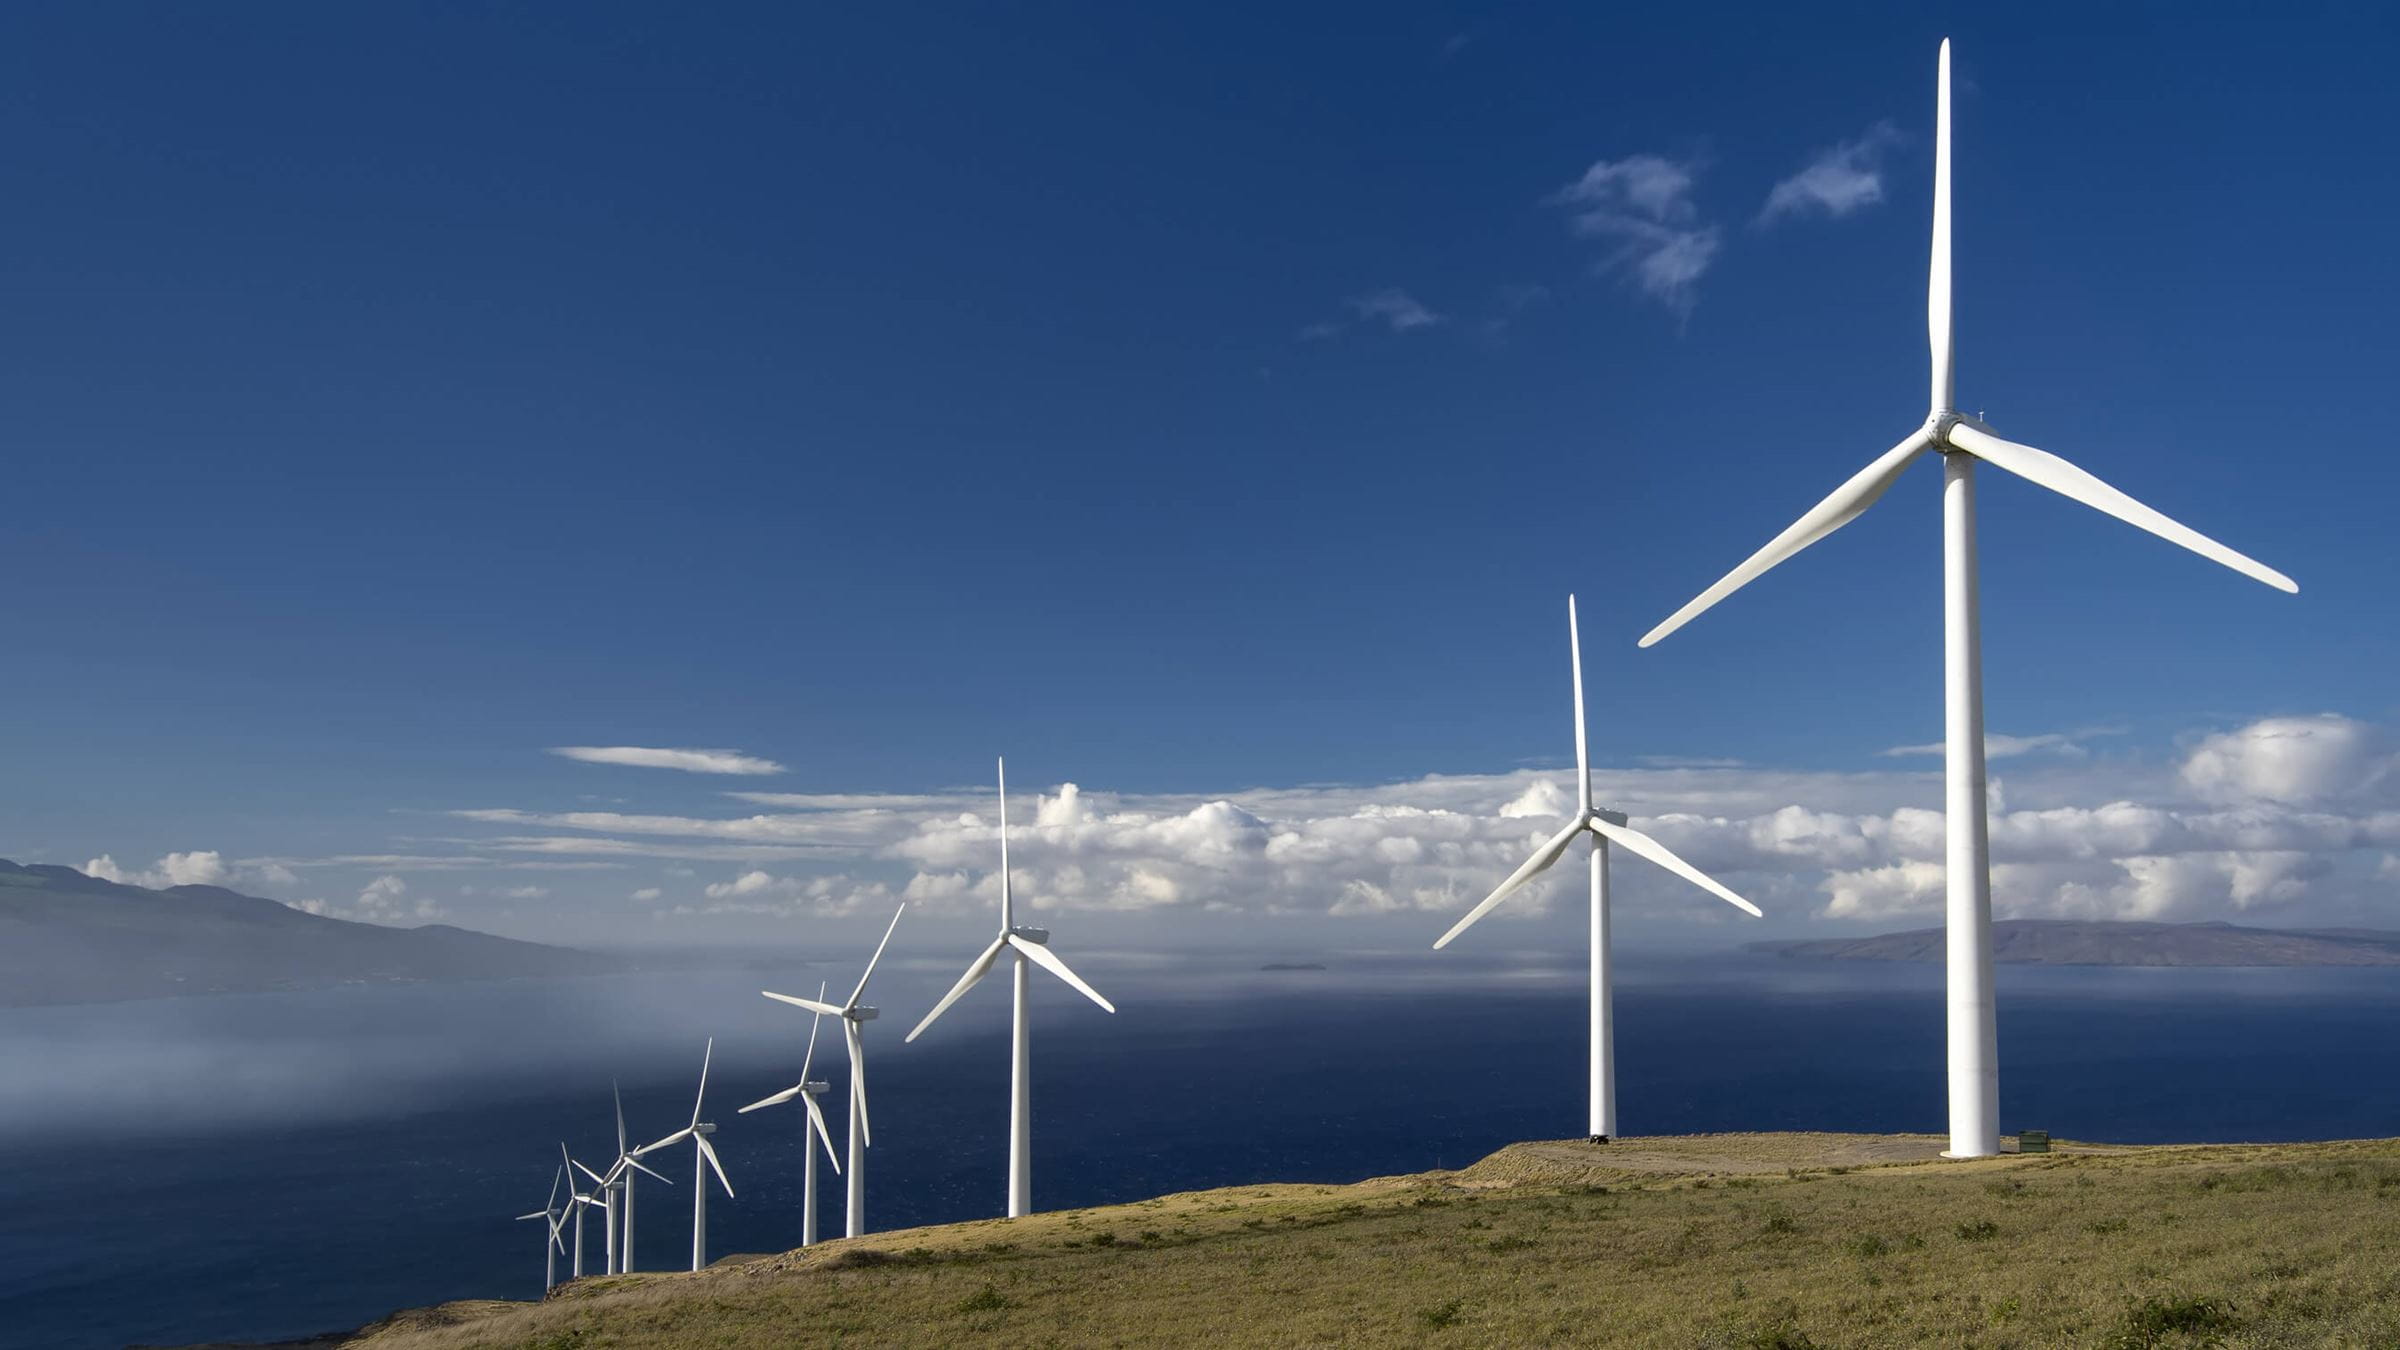 Maui Hawaii wind farm